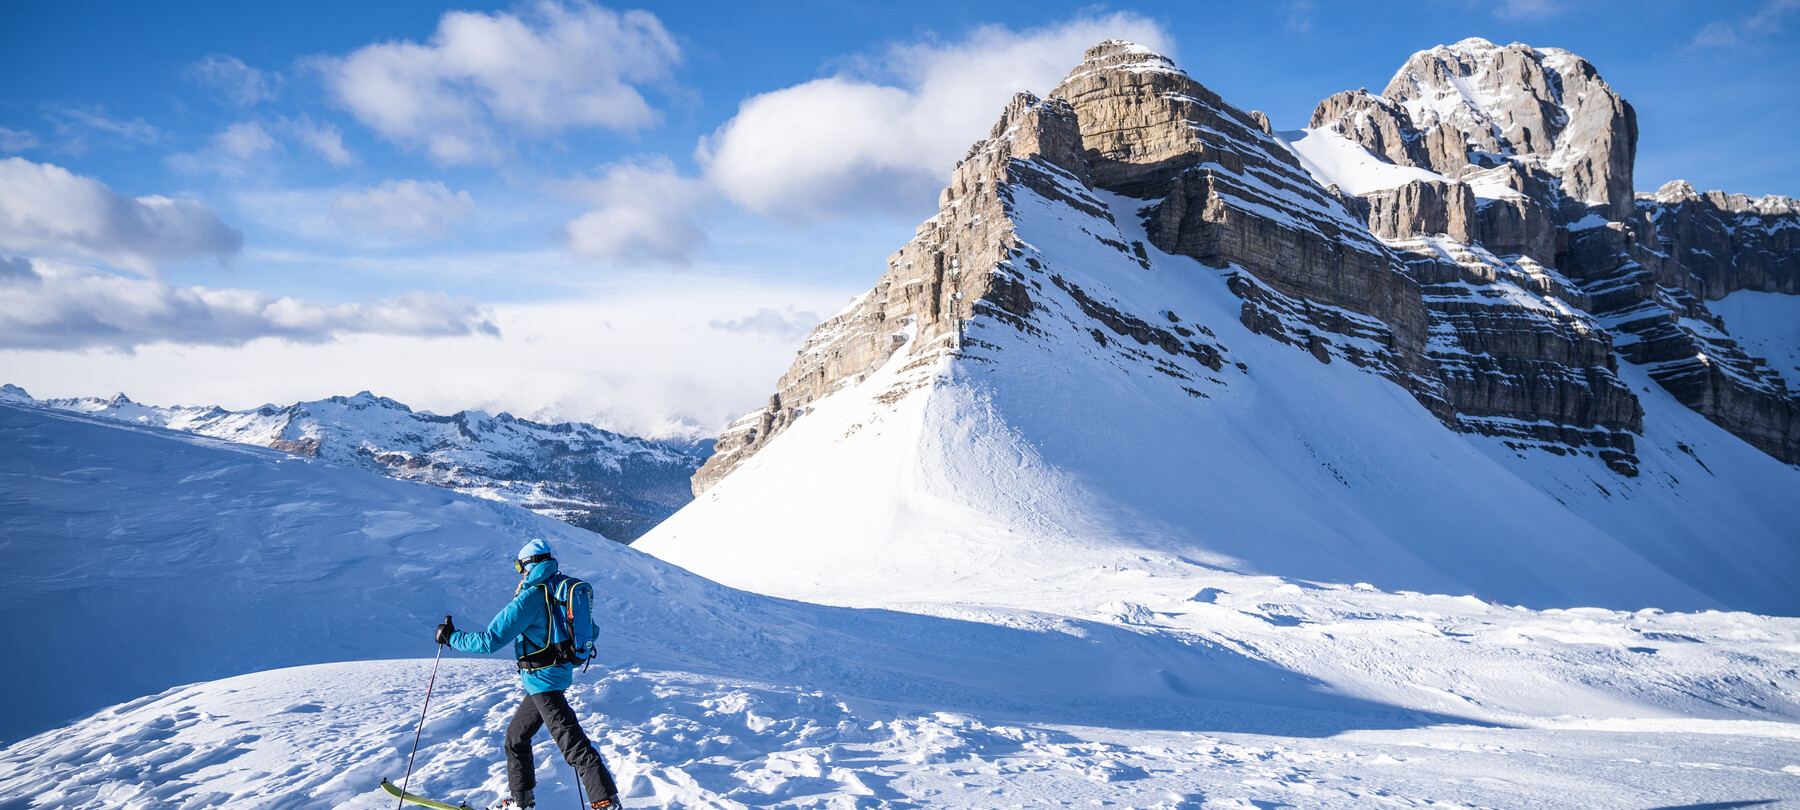 Ski mountaineering stories: Lisa Moreschini and Gabriele Leonardi 